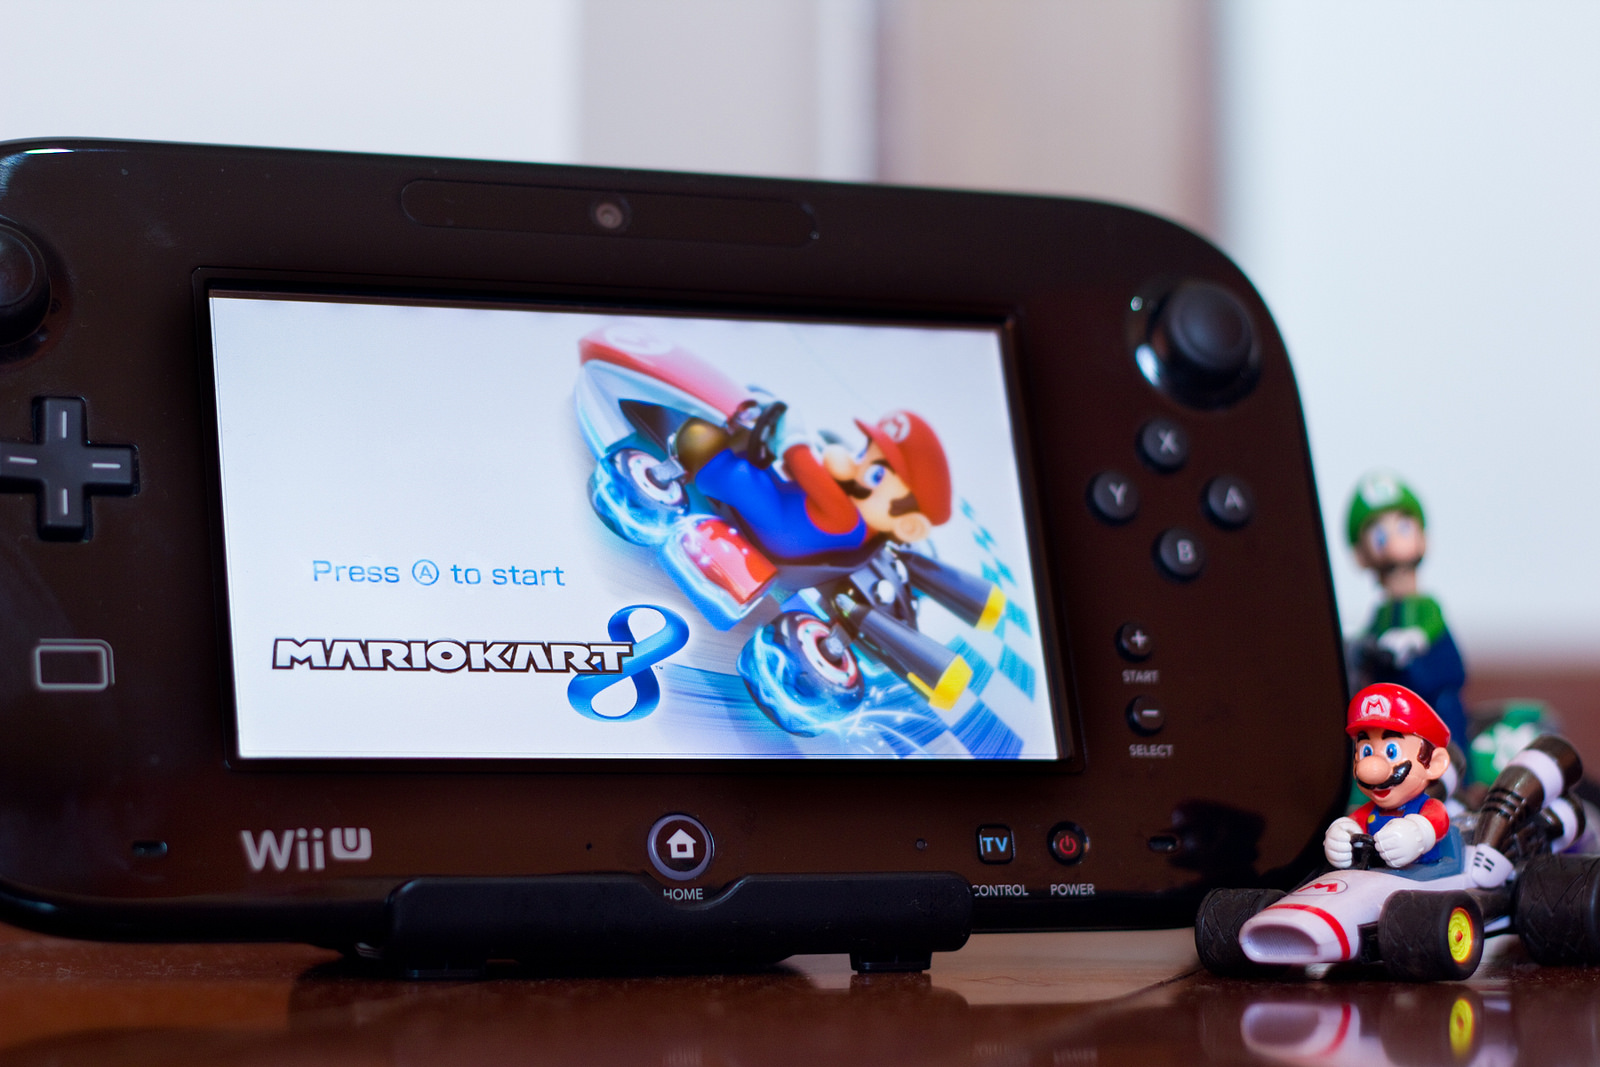 Cemu - Wii U Emulator Download (2023 Latest)